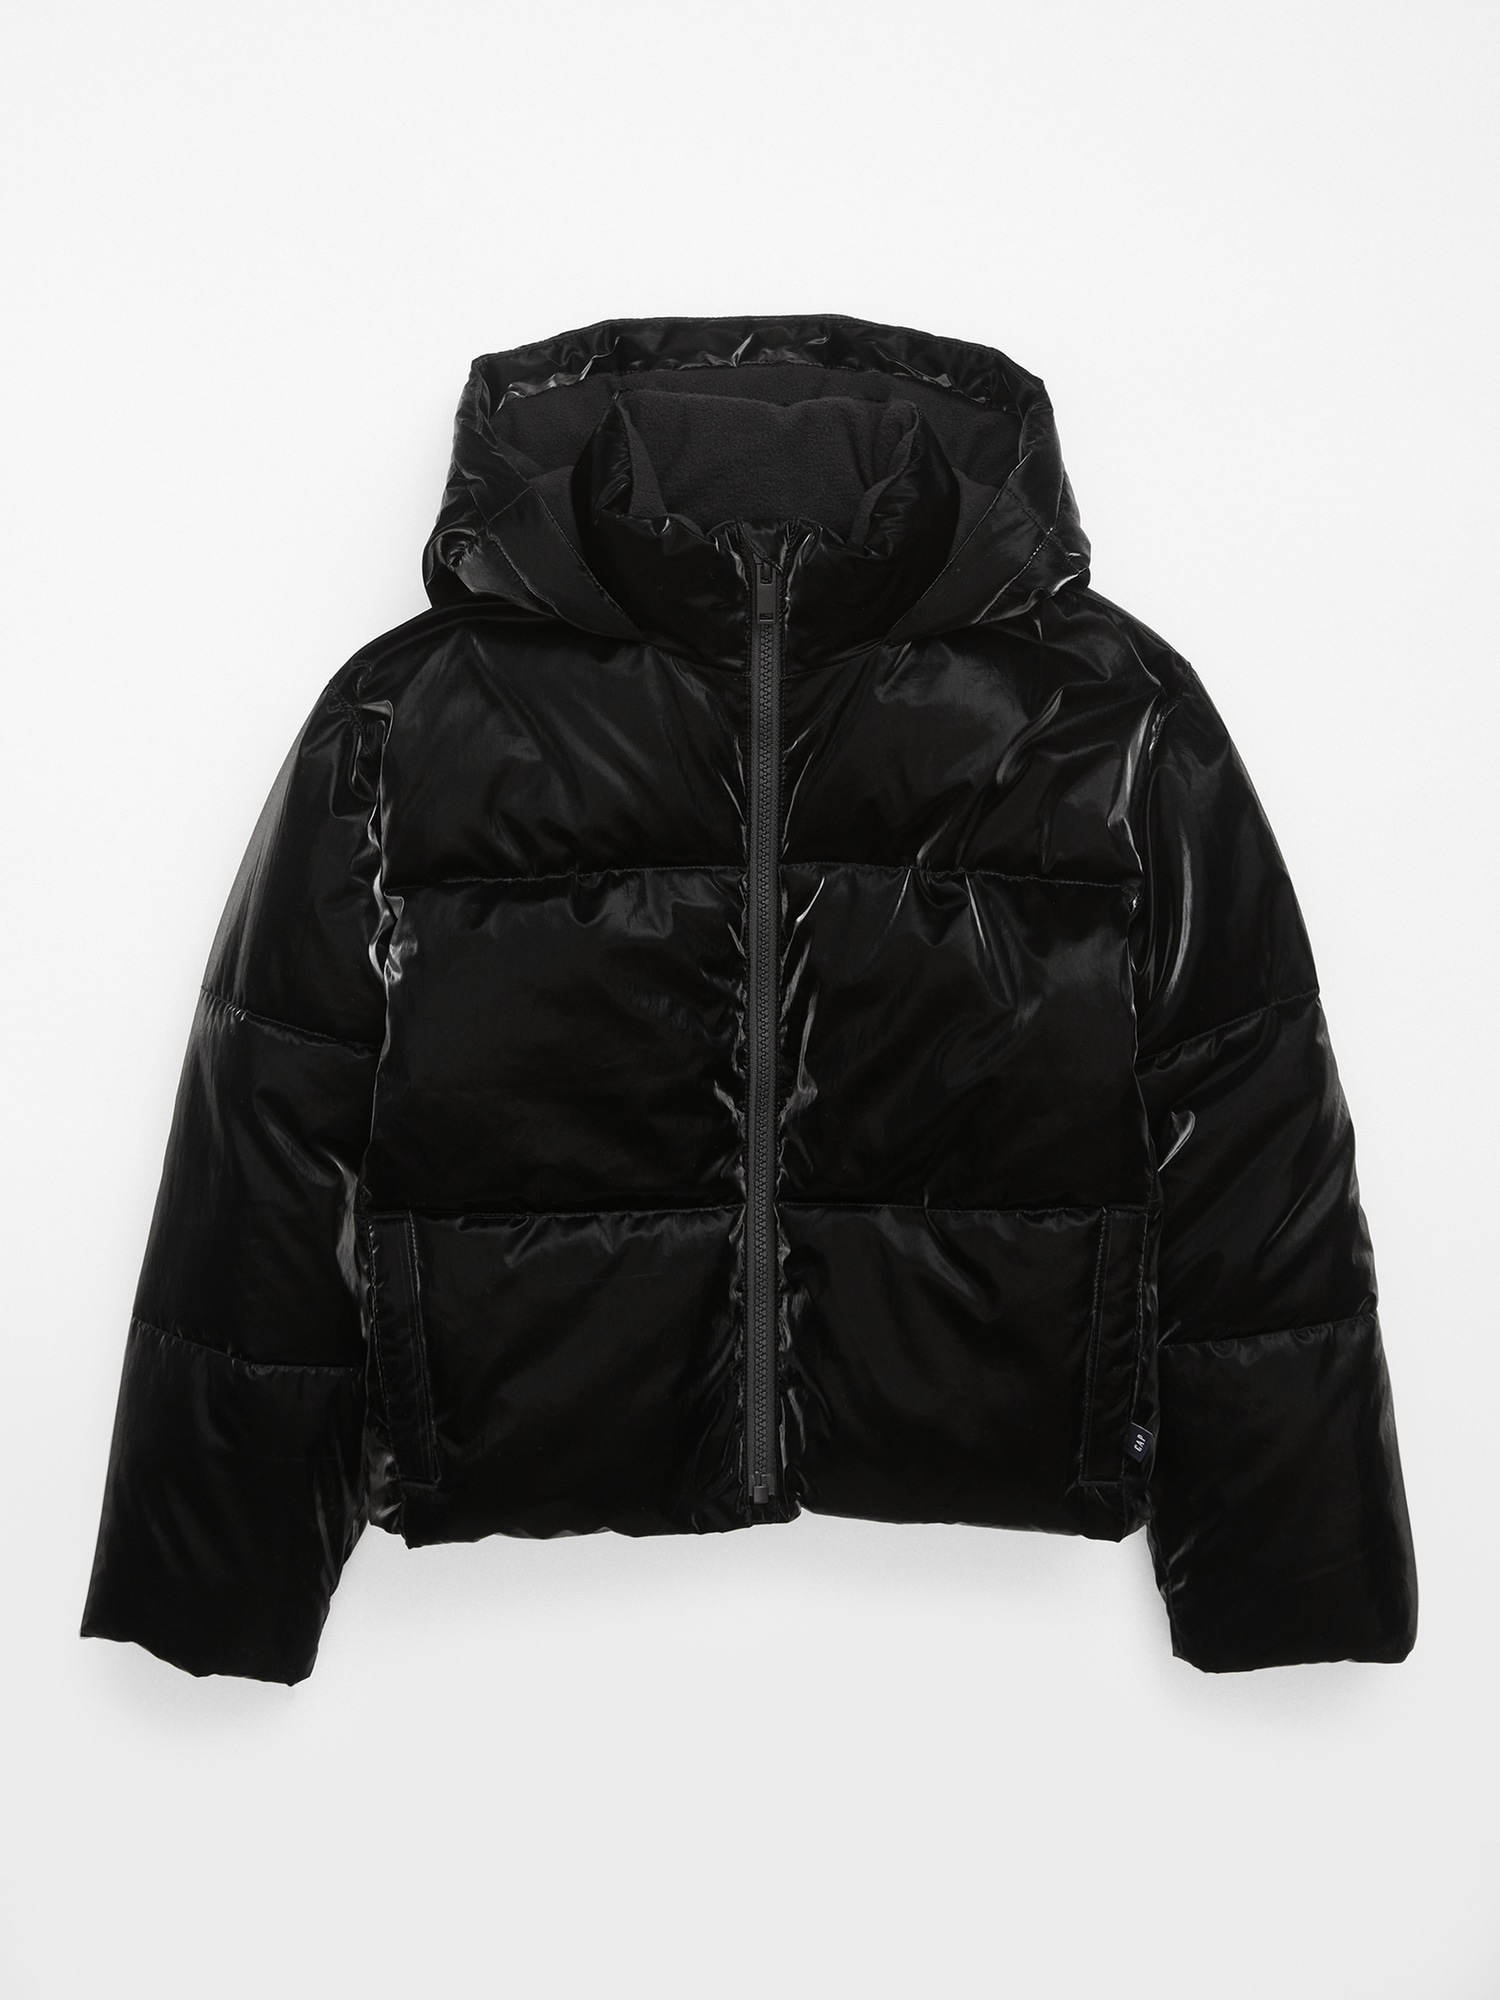 Kids ColdControl Max Shine Puffer Jacket | Gap Factory